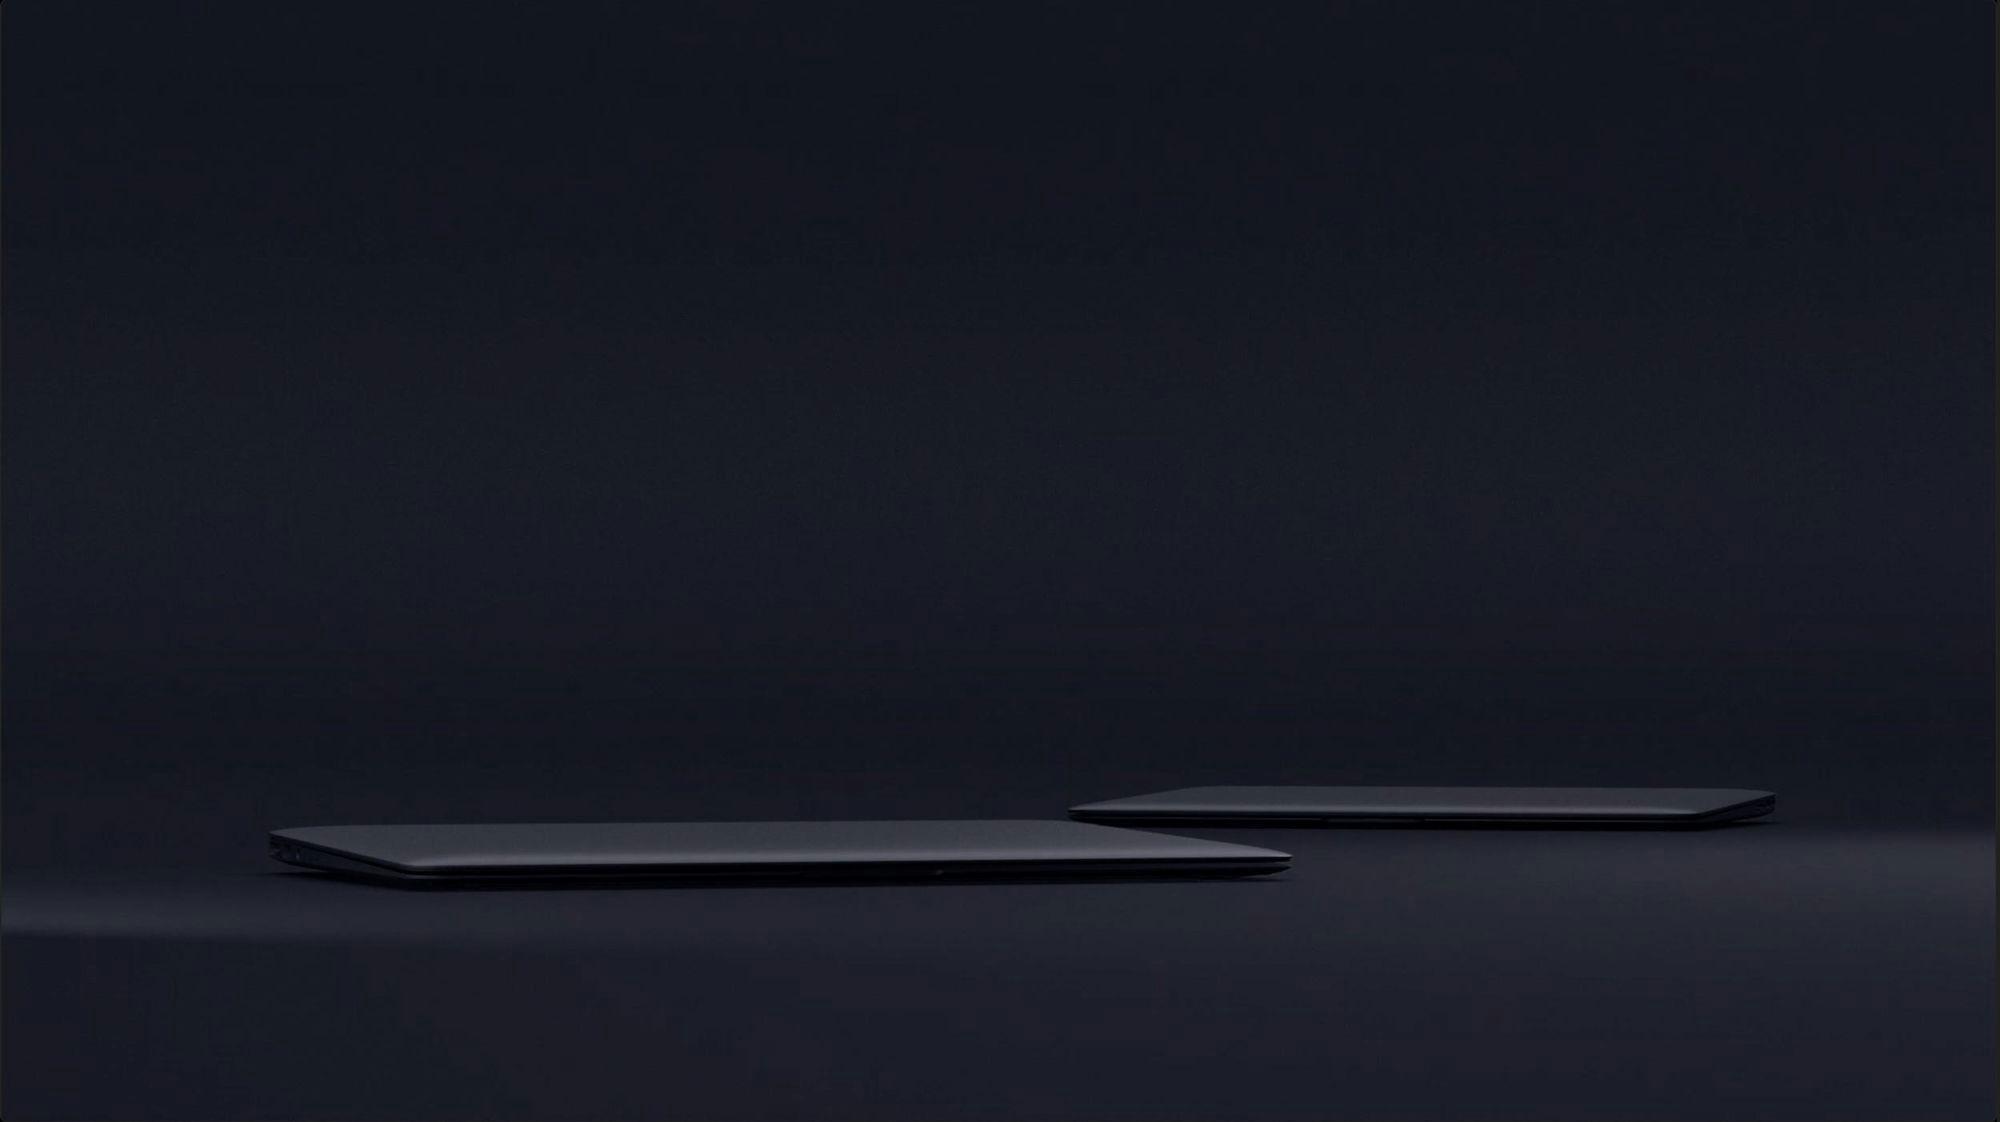 Two closed dark laptops on dark background. Illustration.